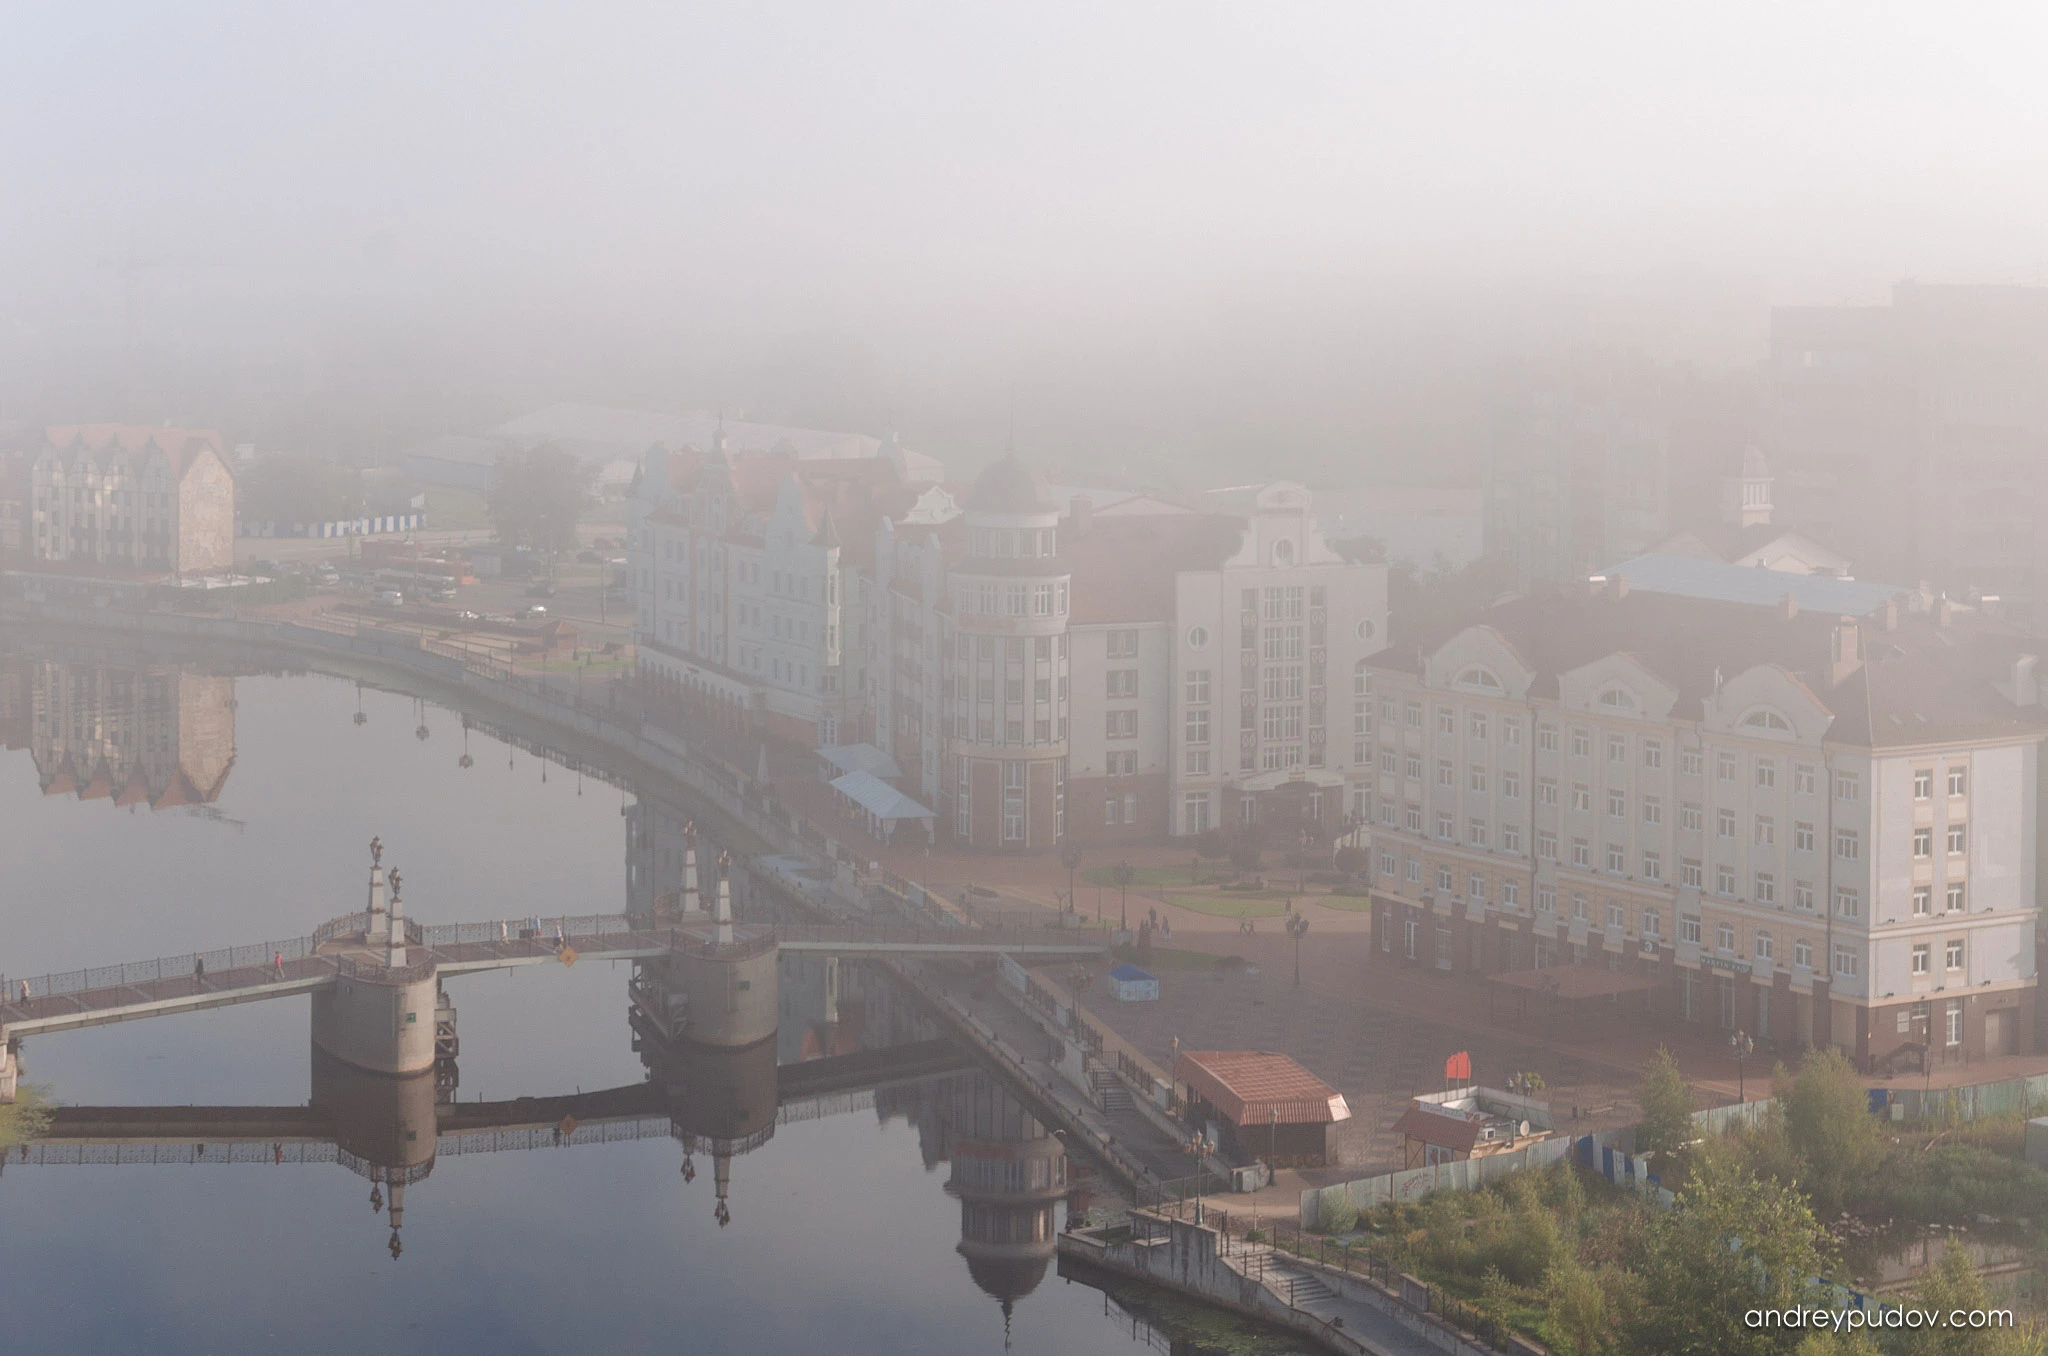 Rybnaya Derevnya. Modern riverside complex on Pregolya river, imitating architecture of Kaliningrad Prussian past.